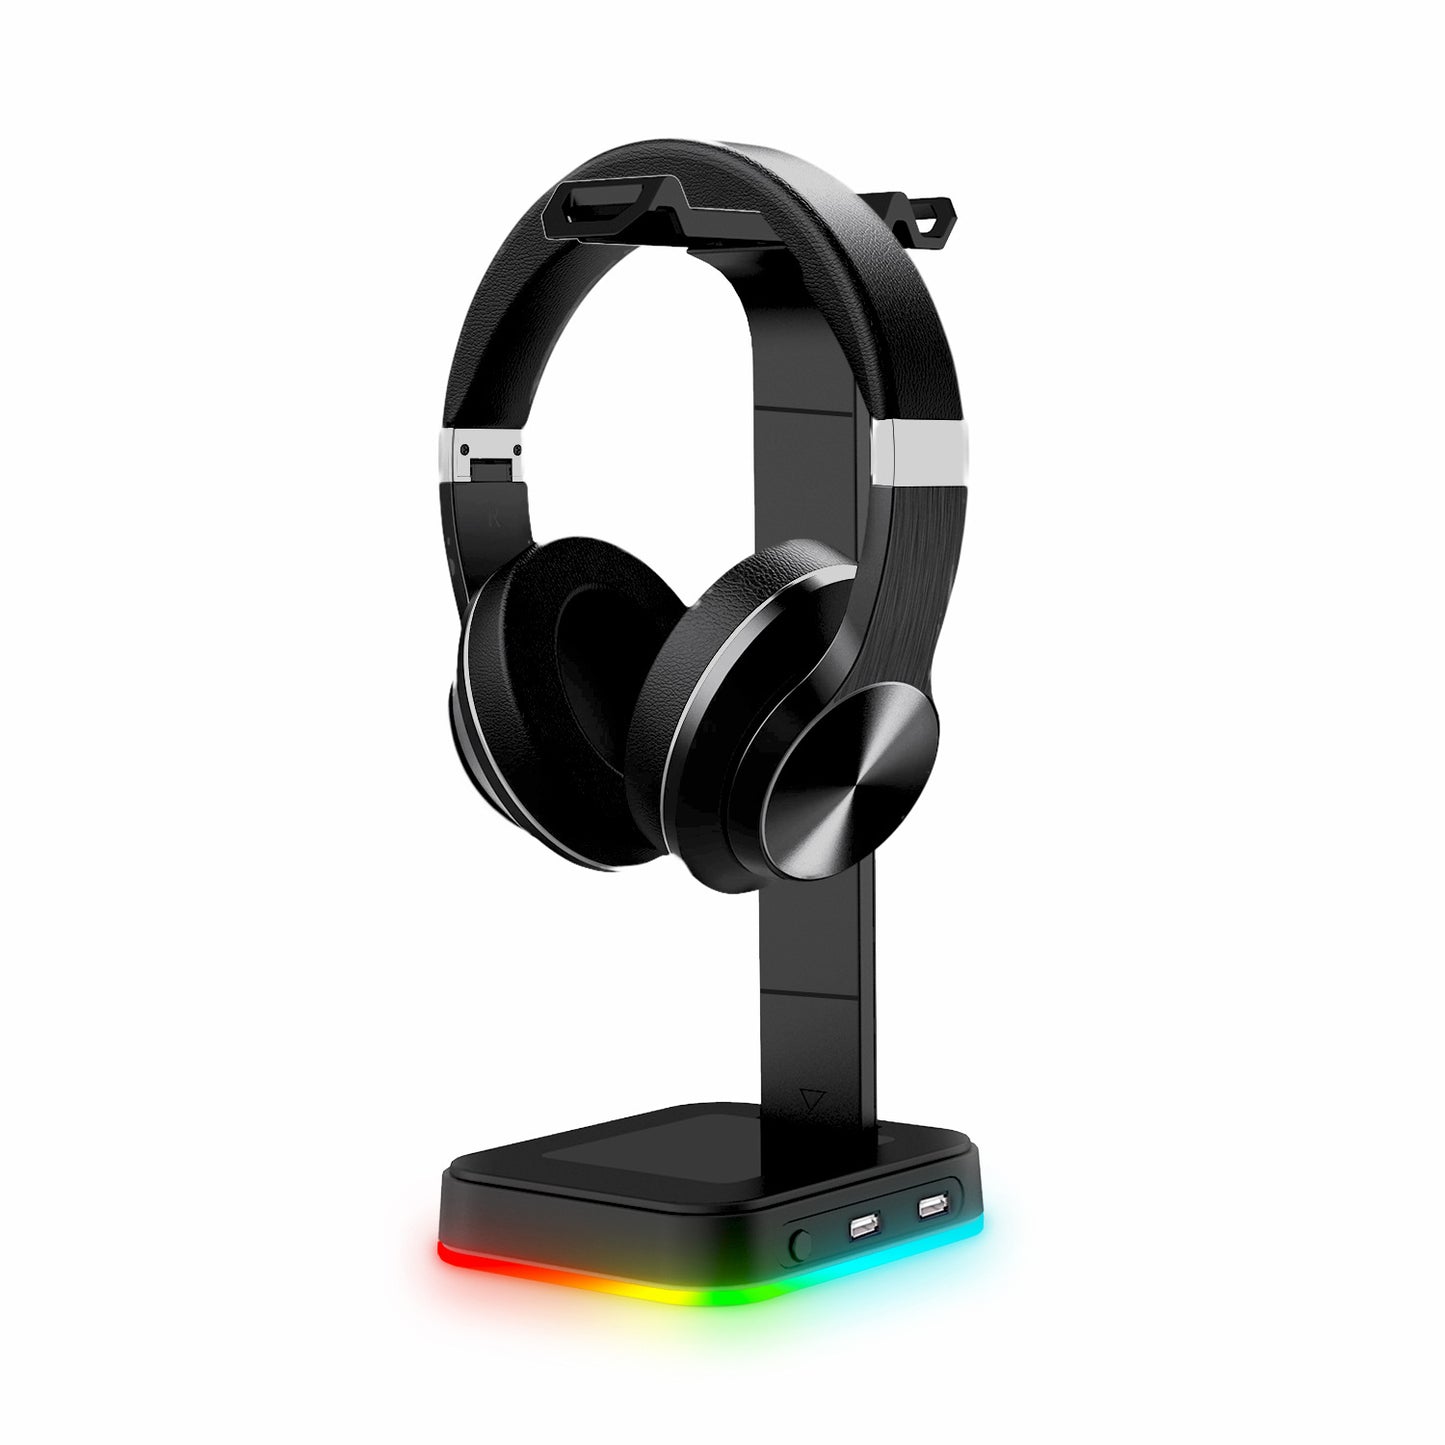 RGB Headphone Stand